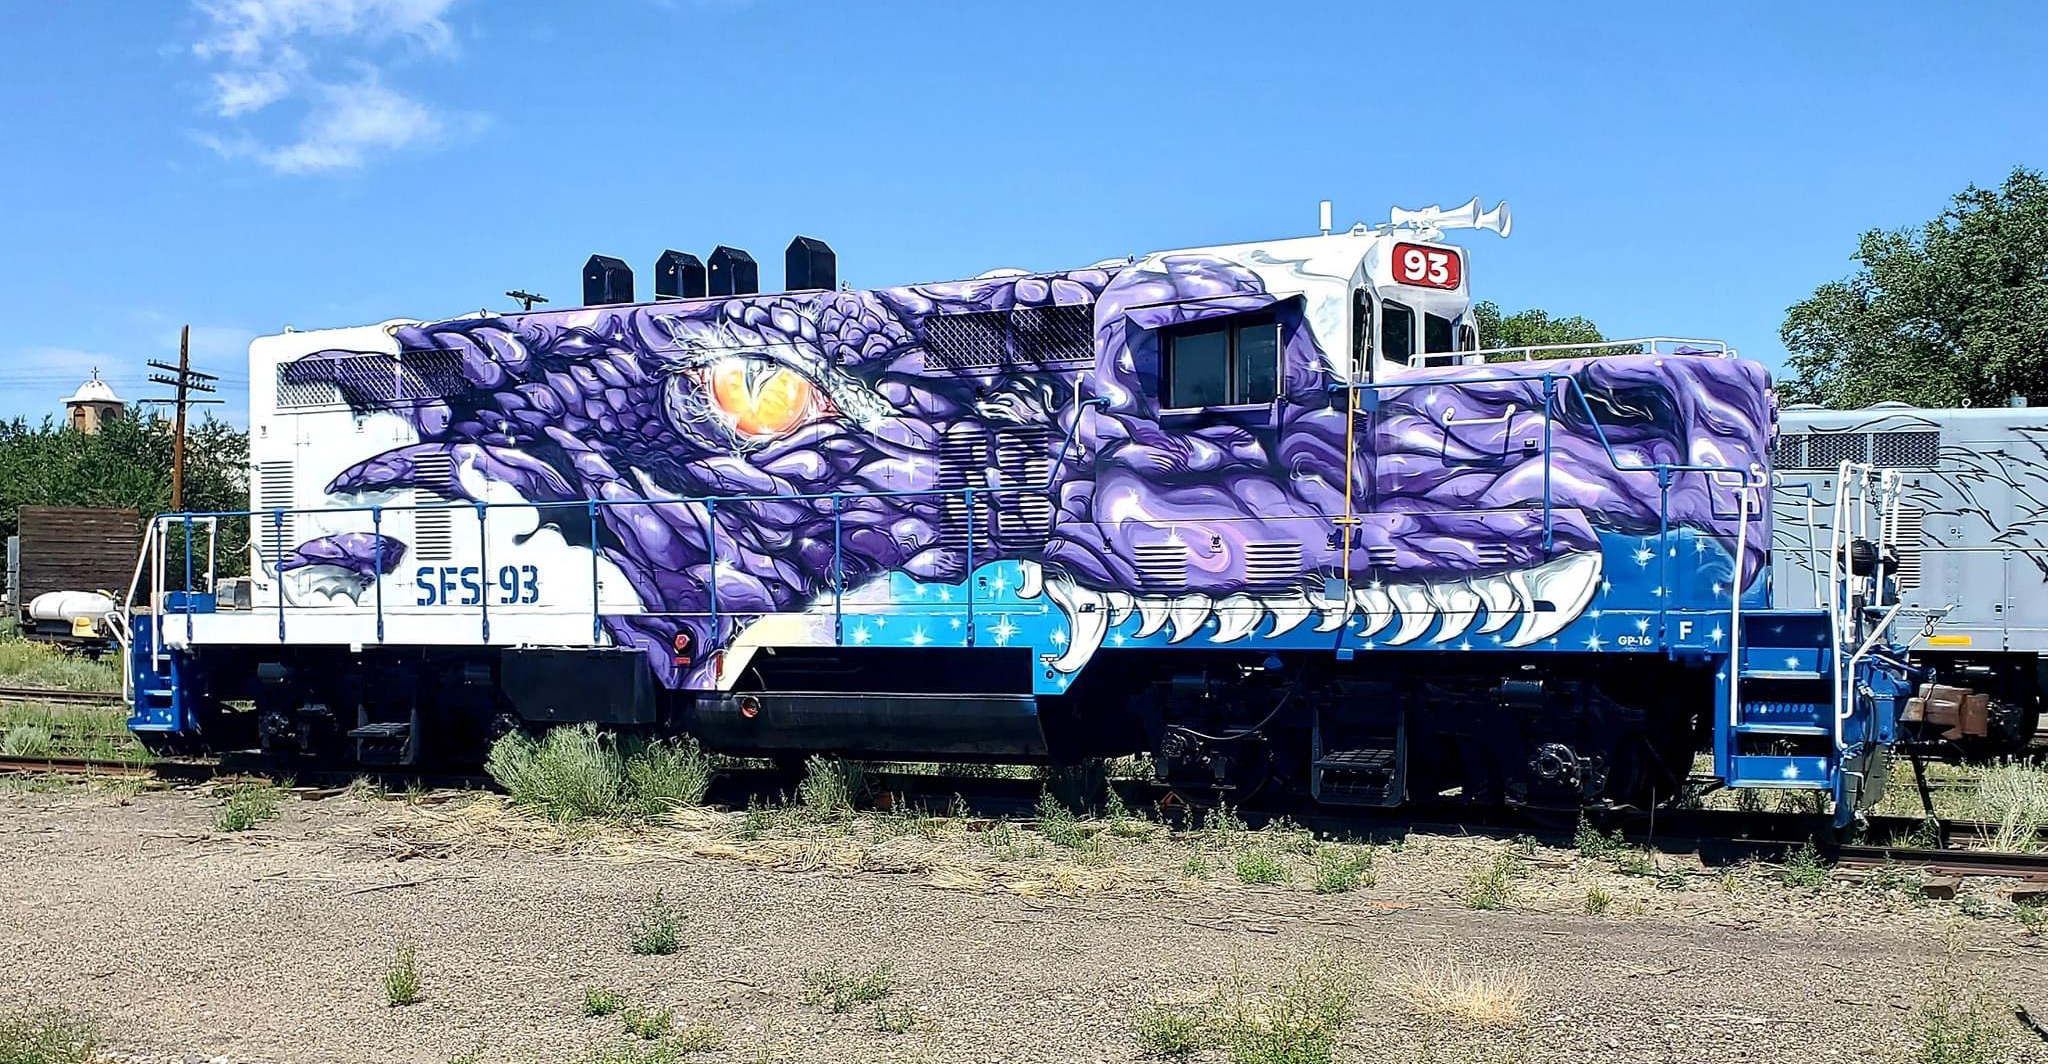 Locomotive with elaborate purple dragon paint scheme